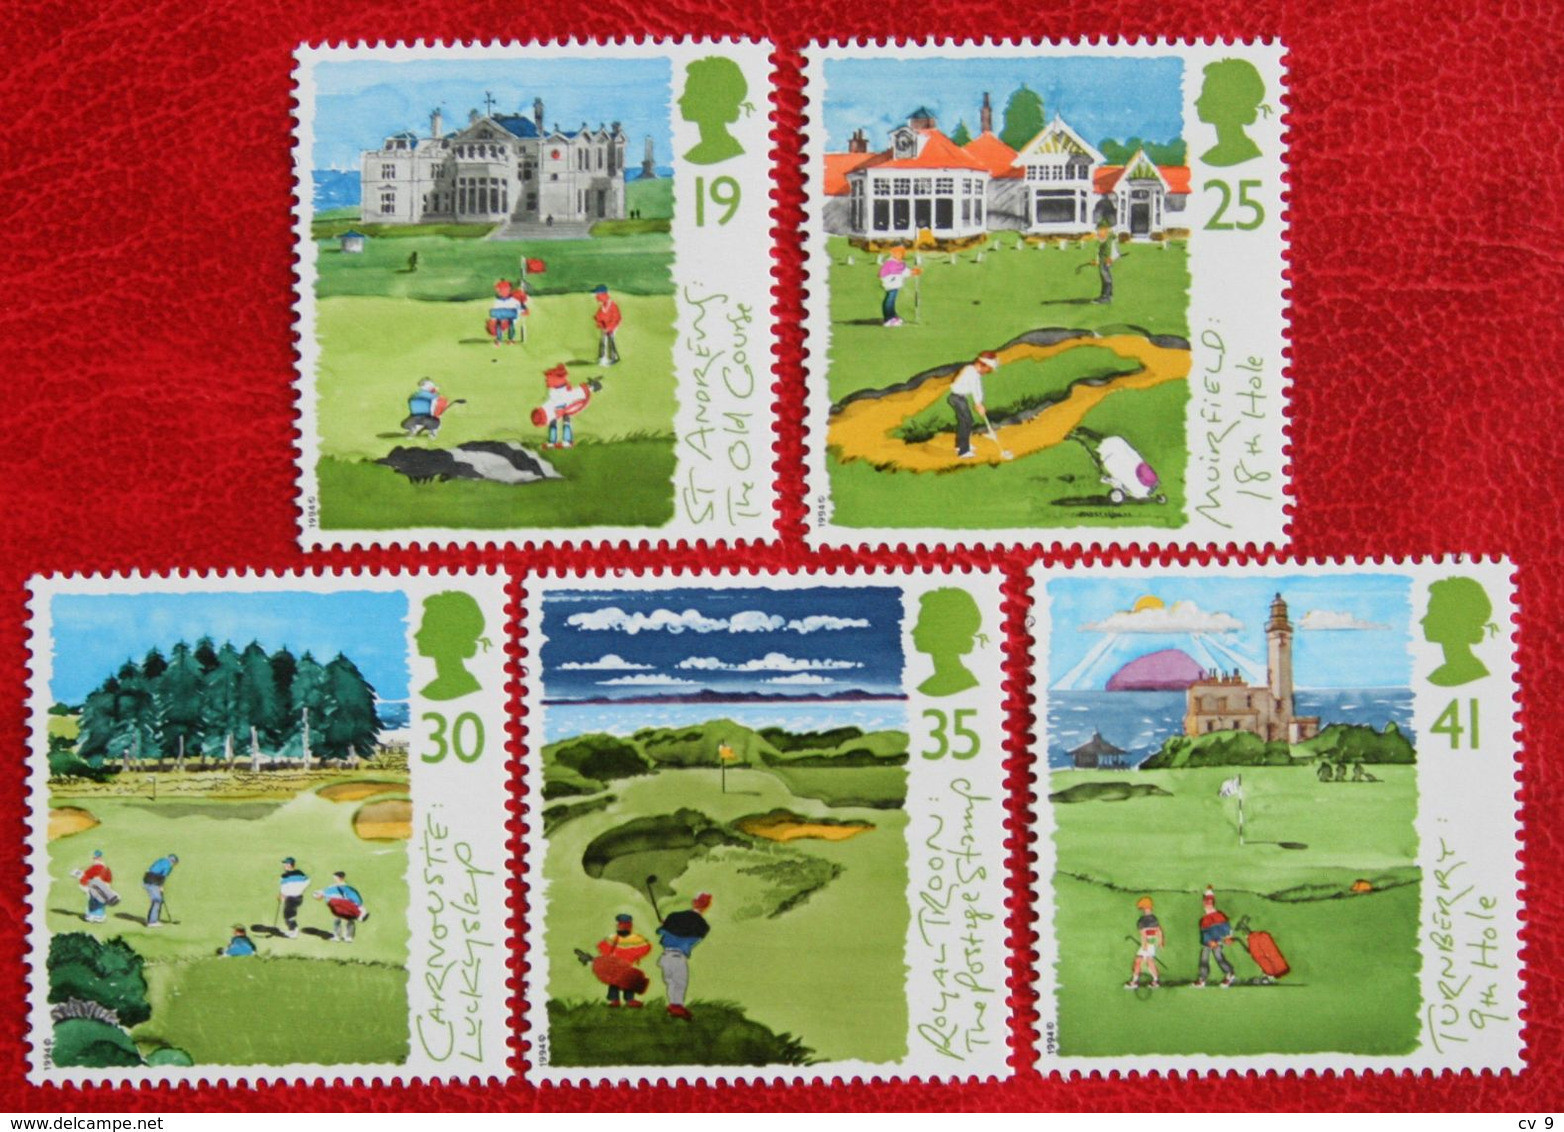 GOLF Scottish Golf Courses (Mi 1522-1526) 1994 POSTFRIS MNH ** ENGLAND GRANDE-BRETAGNE GB GREAT BRITAIN - Unused Stamps